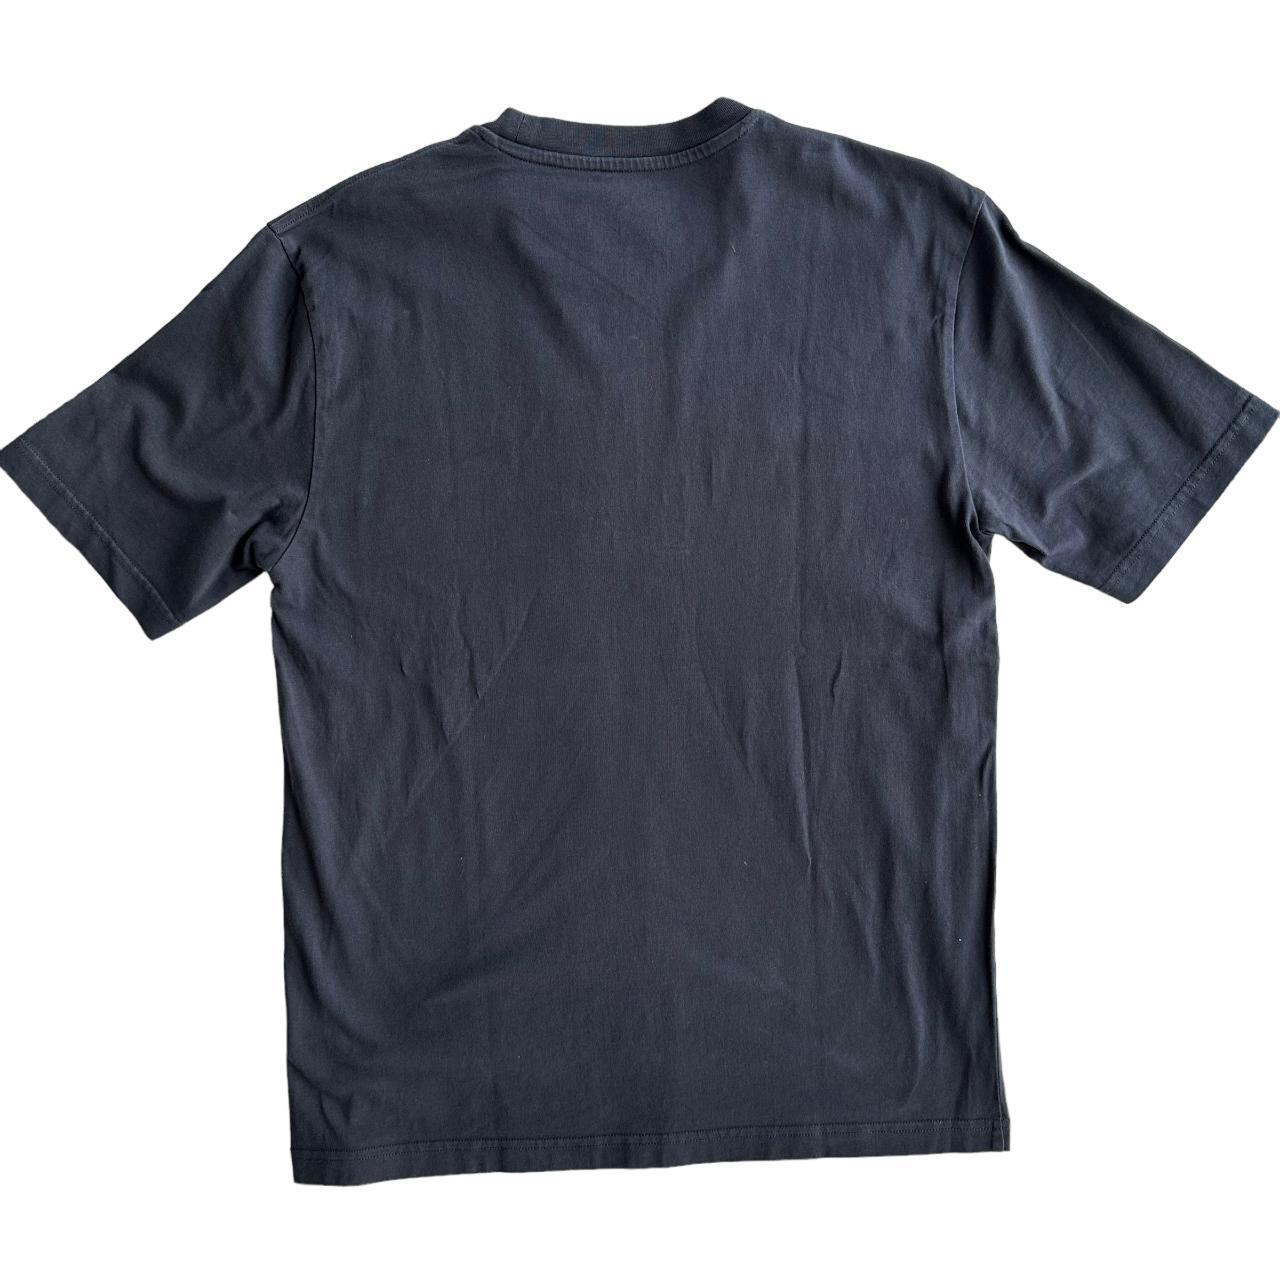 PALACE iBun front Grey T-shirt tri-ferg - Known Source